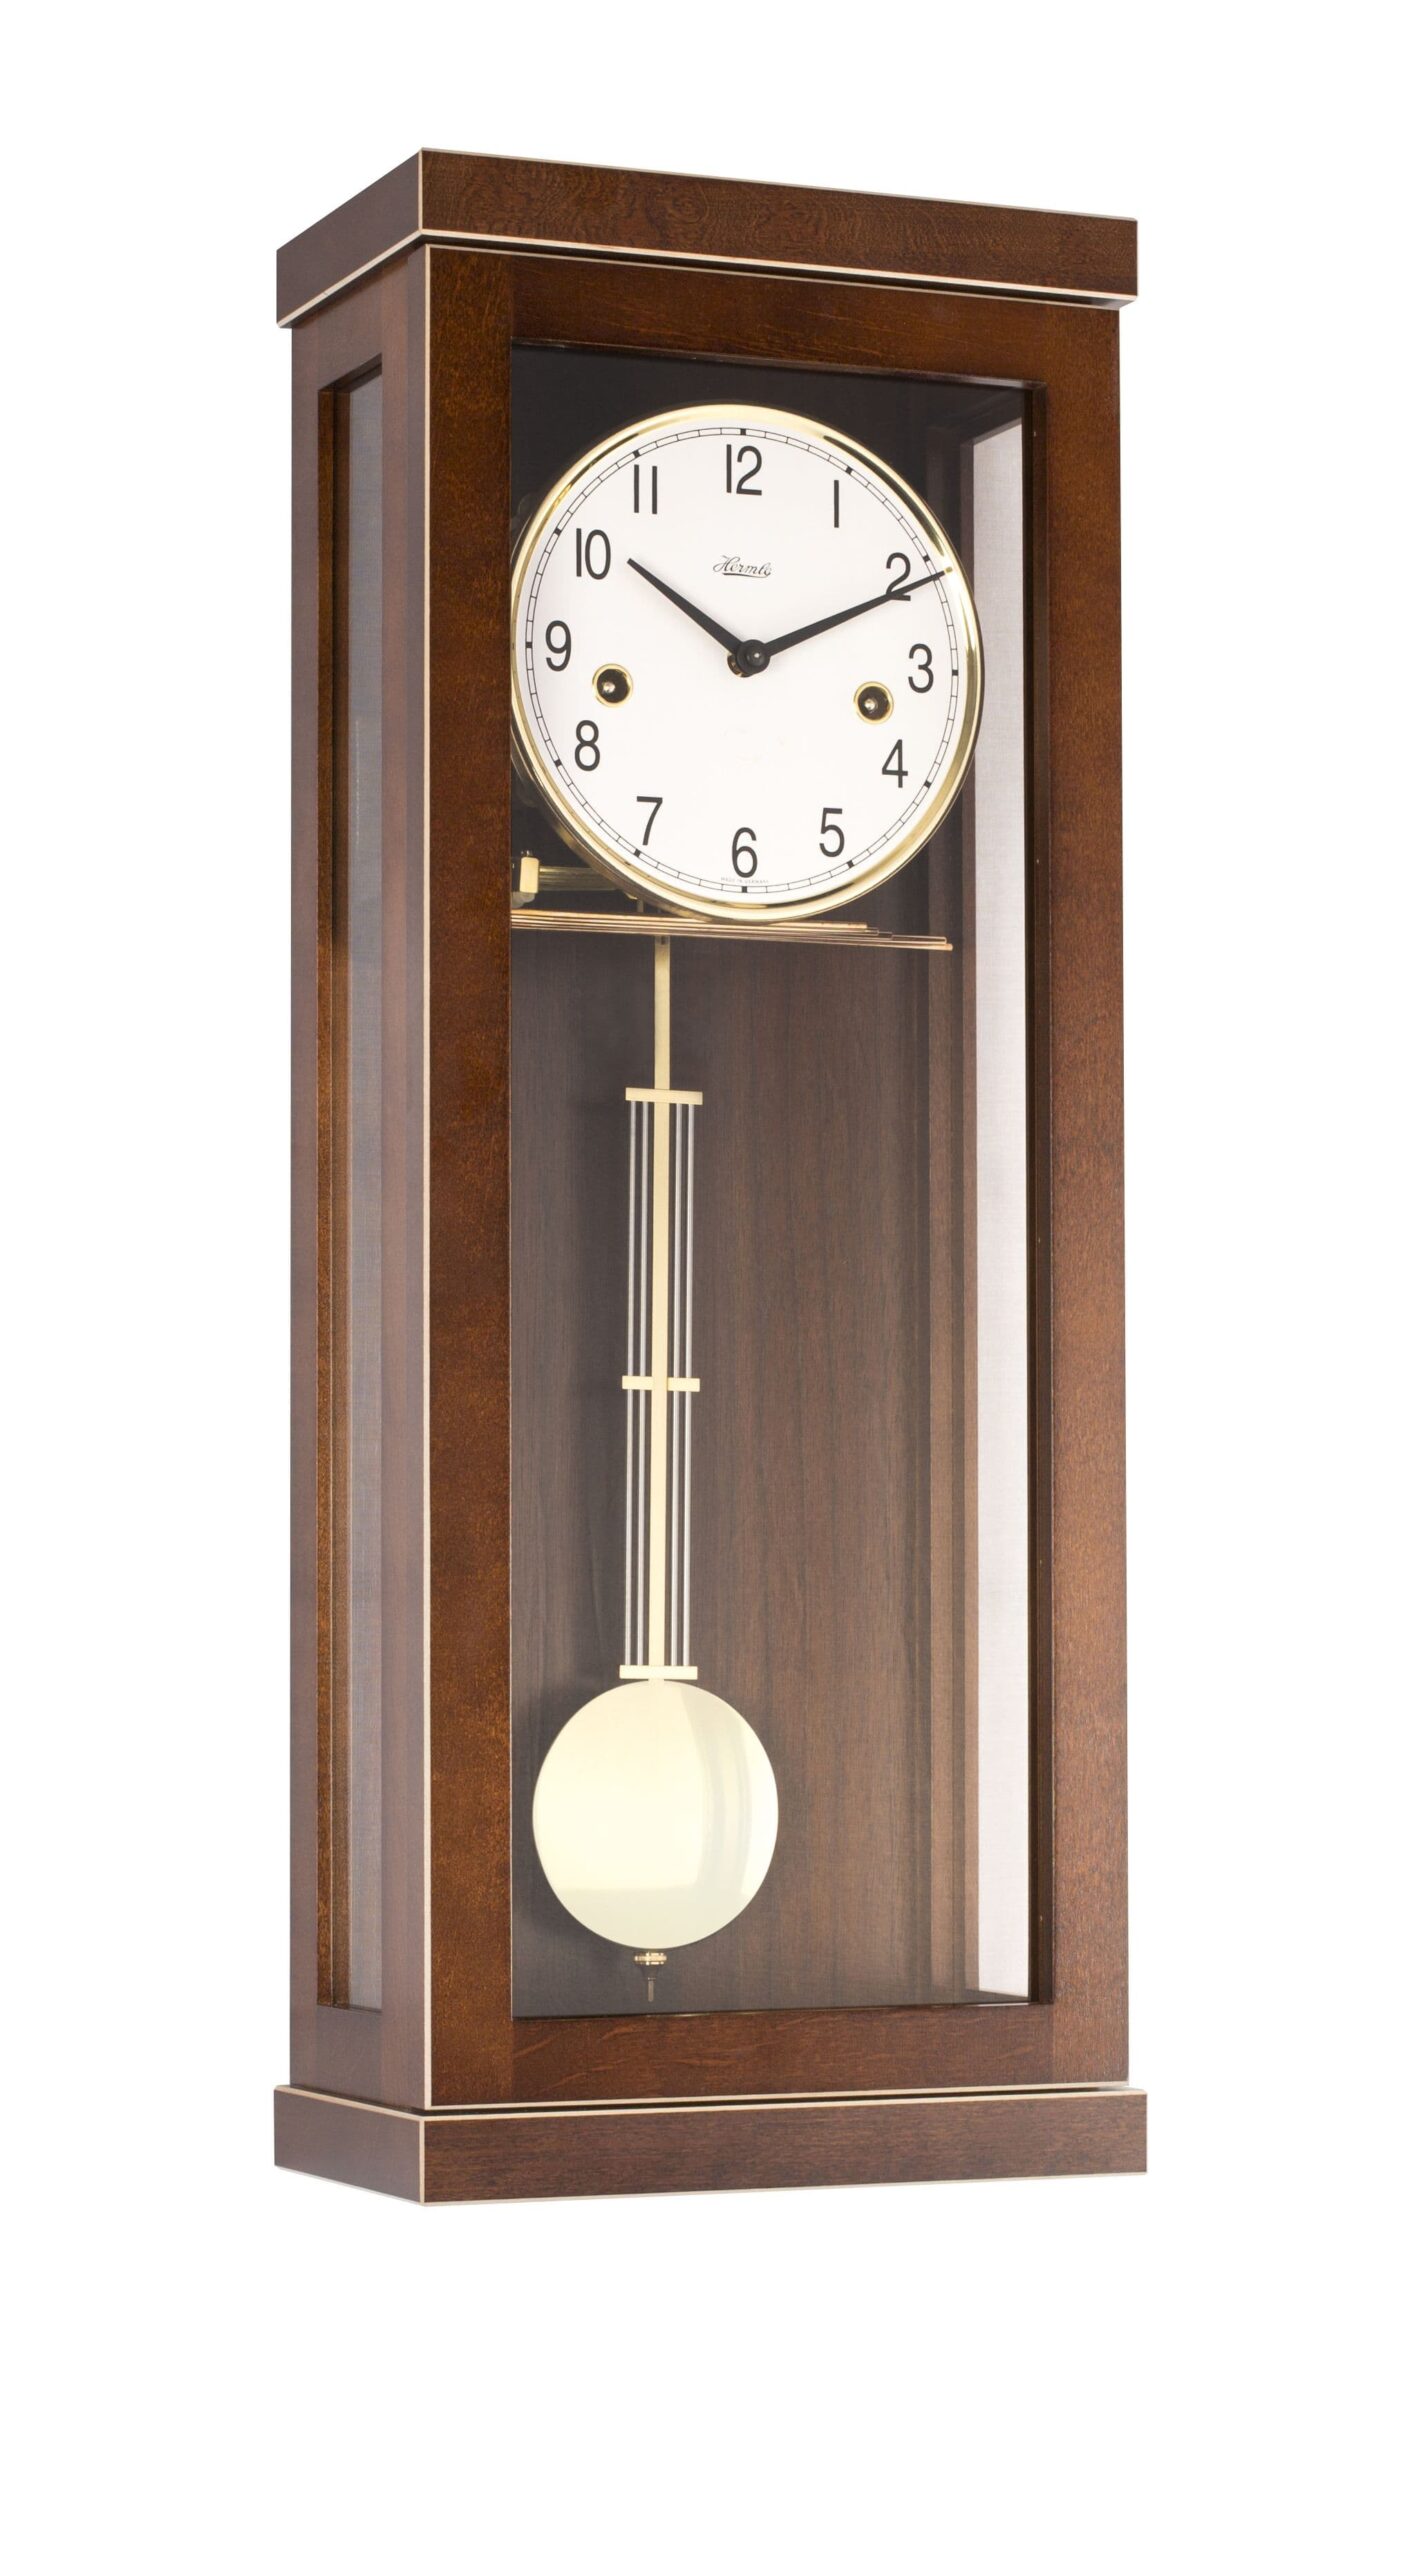 hermle-wall-clock-carrington-regulator-walnut-1-2-hour-strike-70989030141